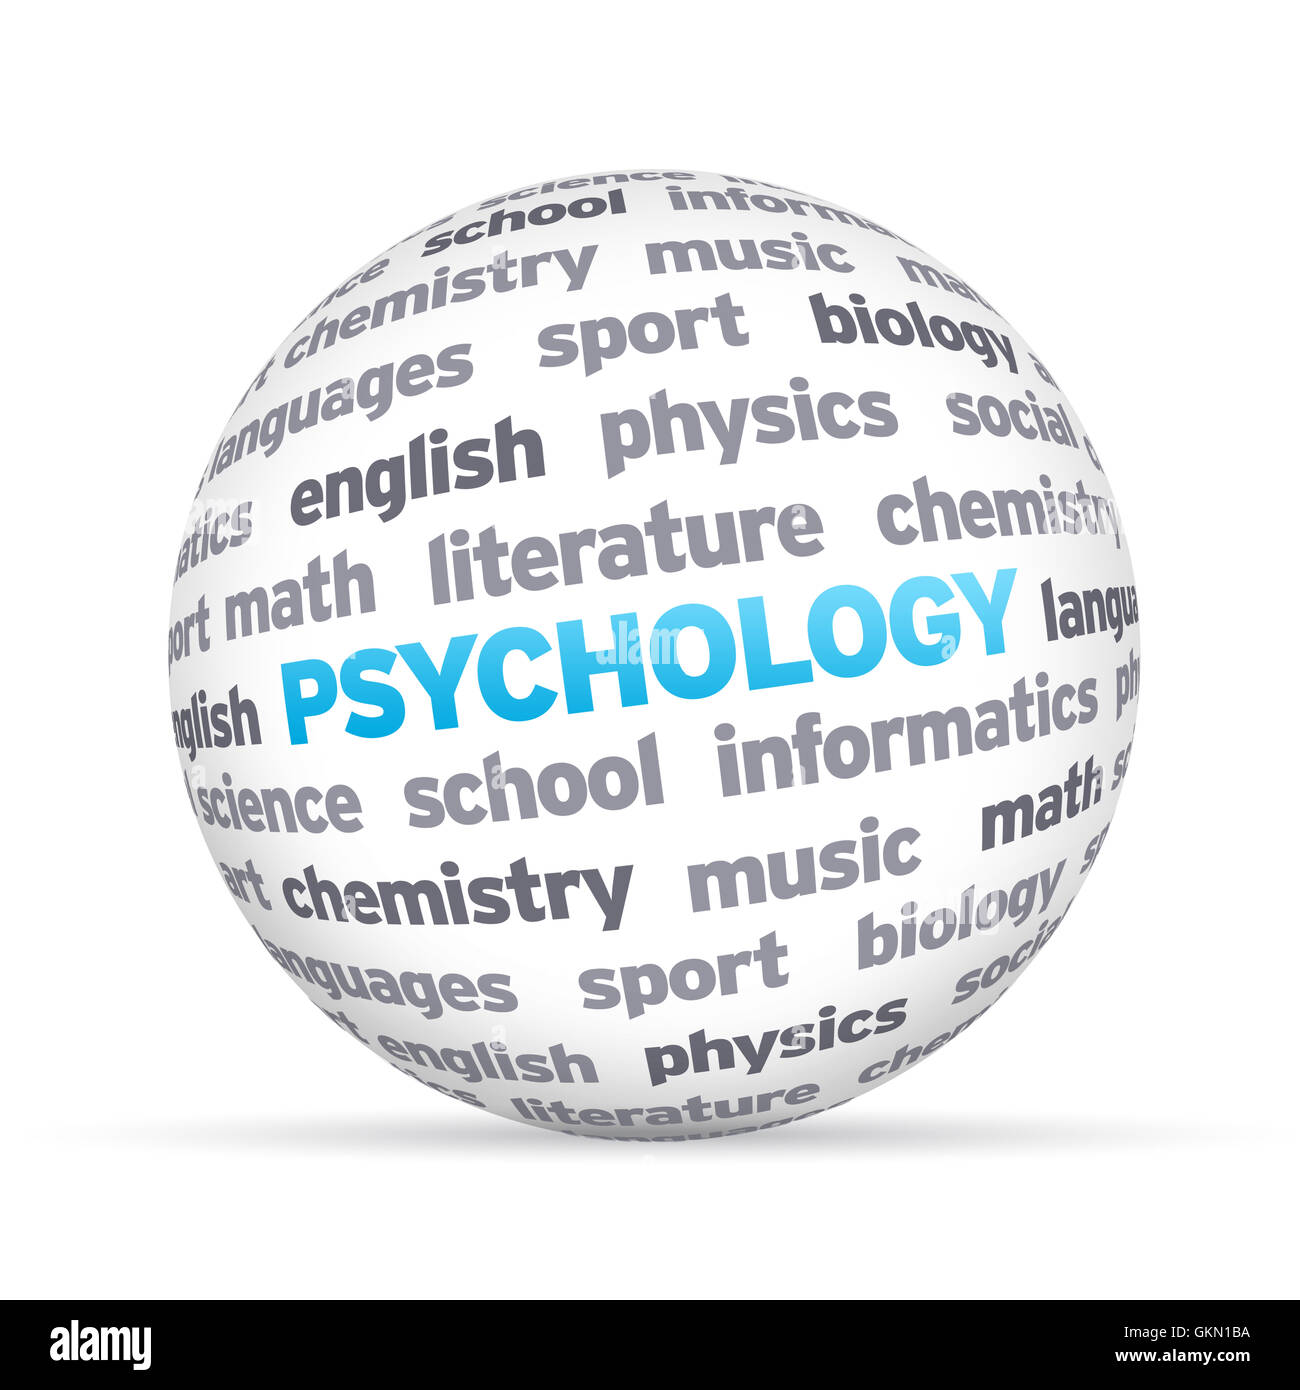 Psychology Stock Photo